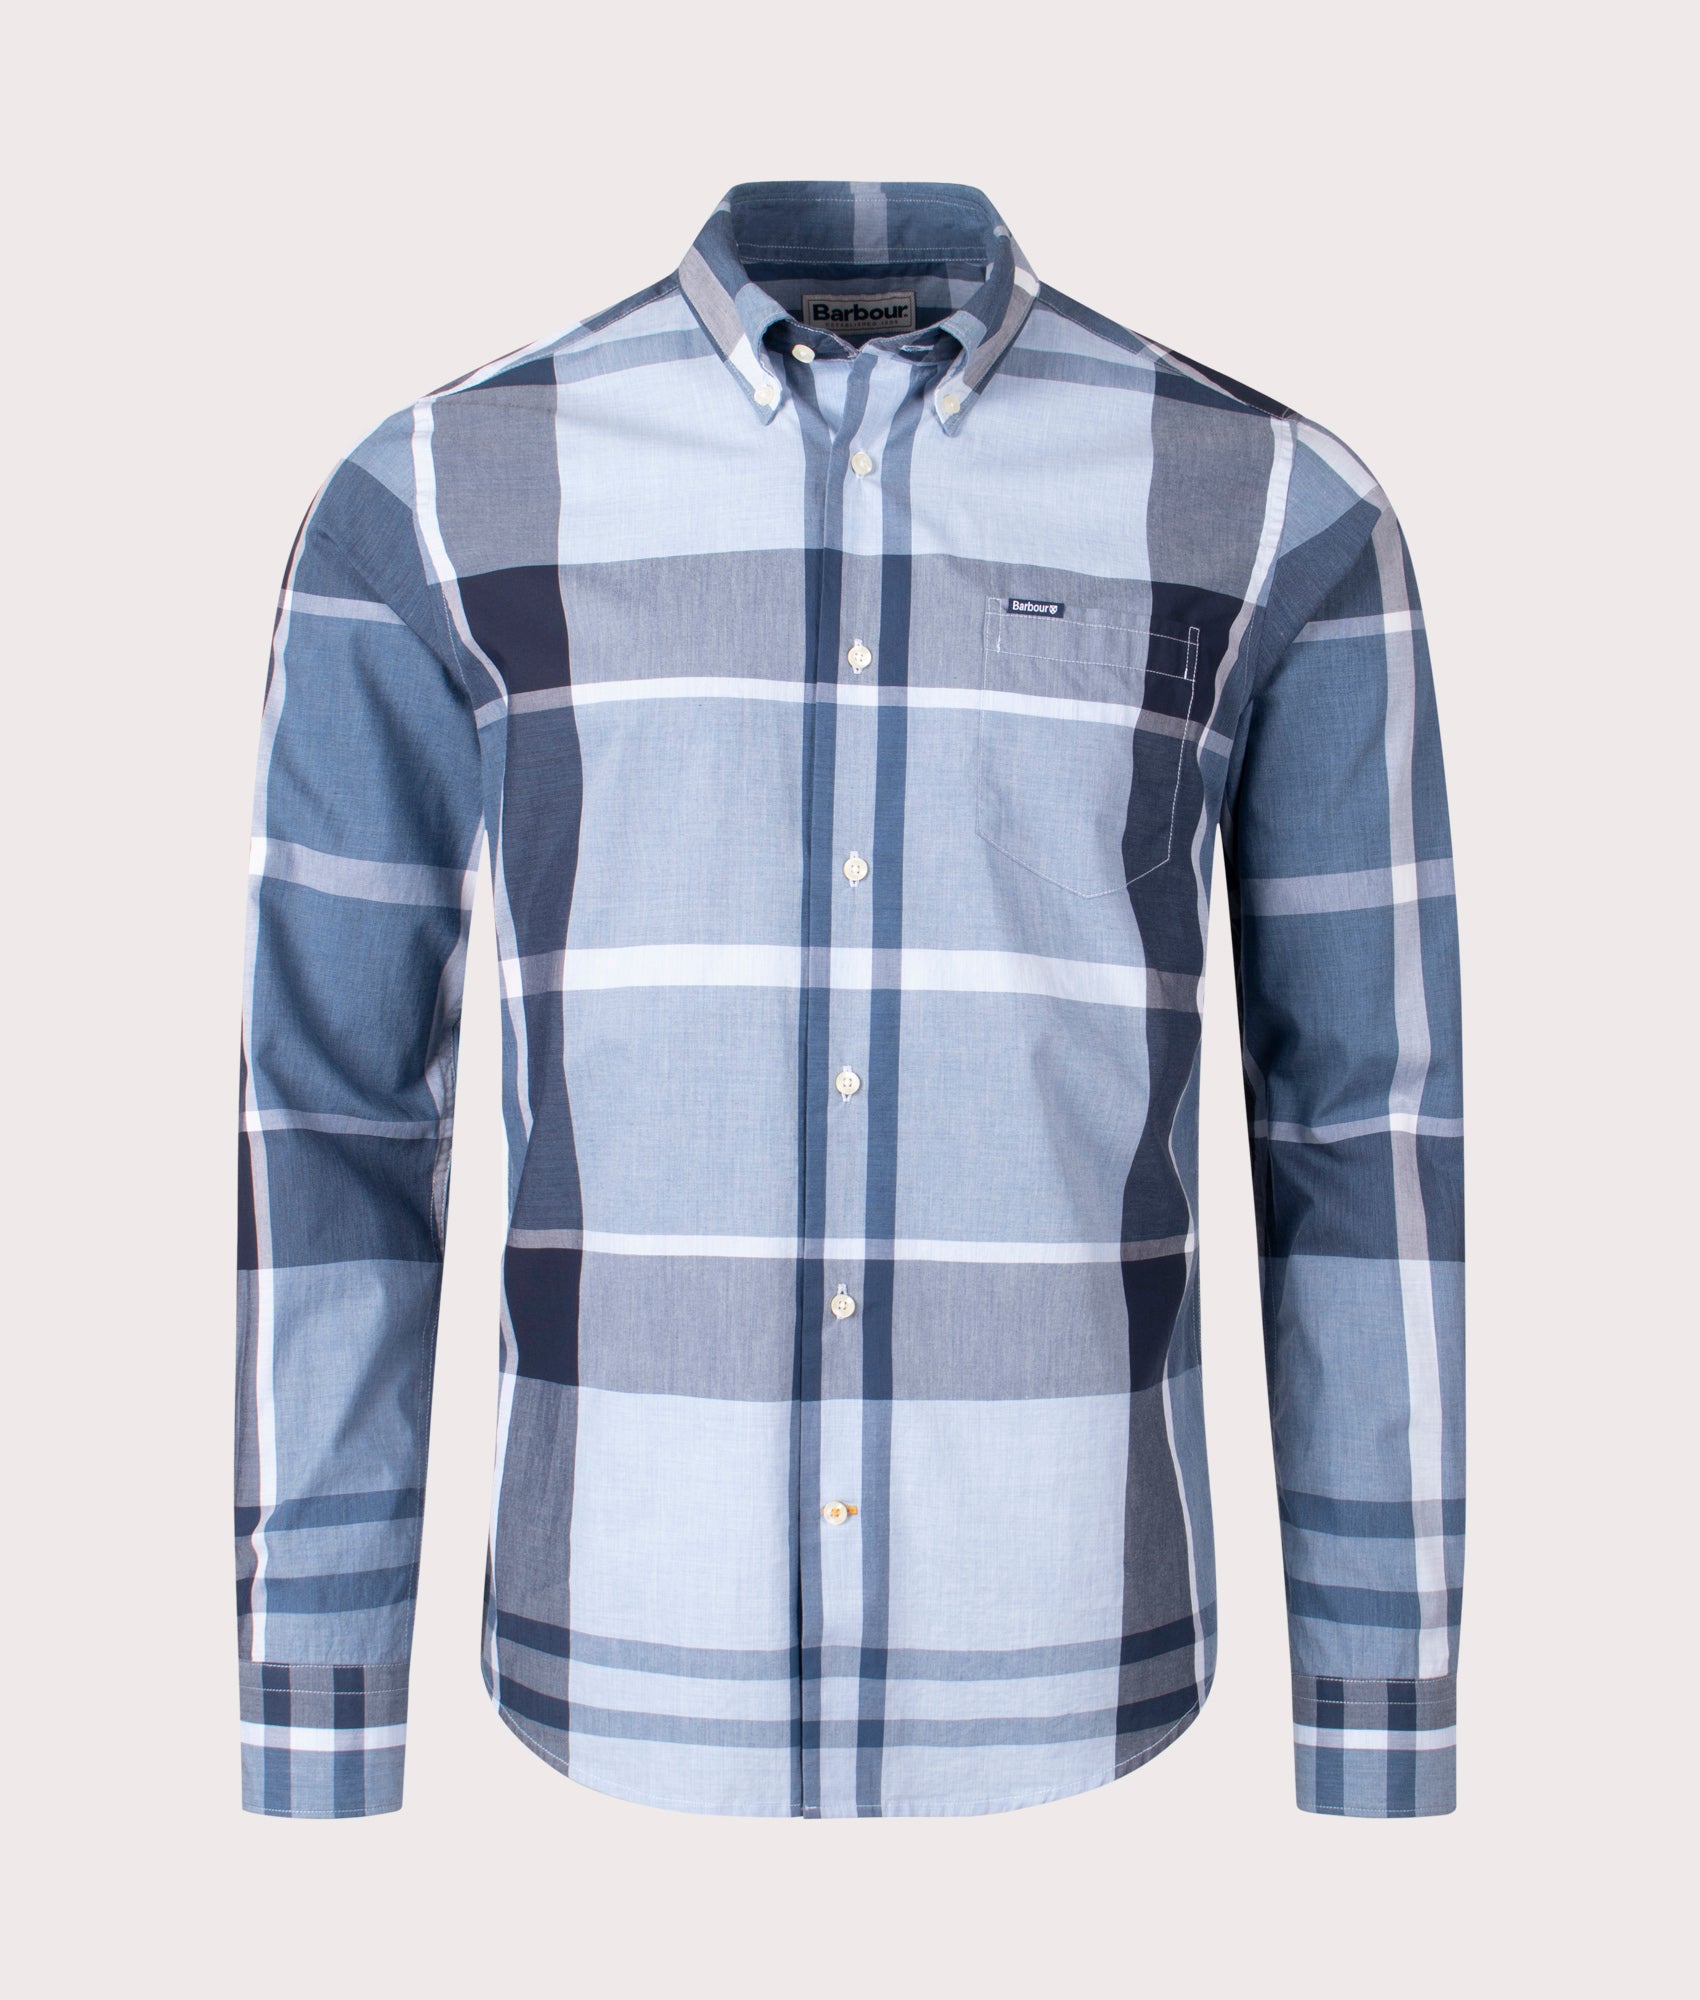 Barbour Lifestyle Mens Harris Shirt Tailored Shirt - Colour: TN22 Berwick Blue Tartan - Size: XL